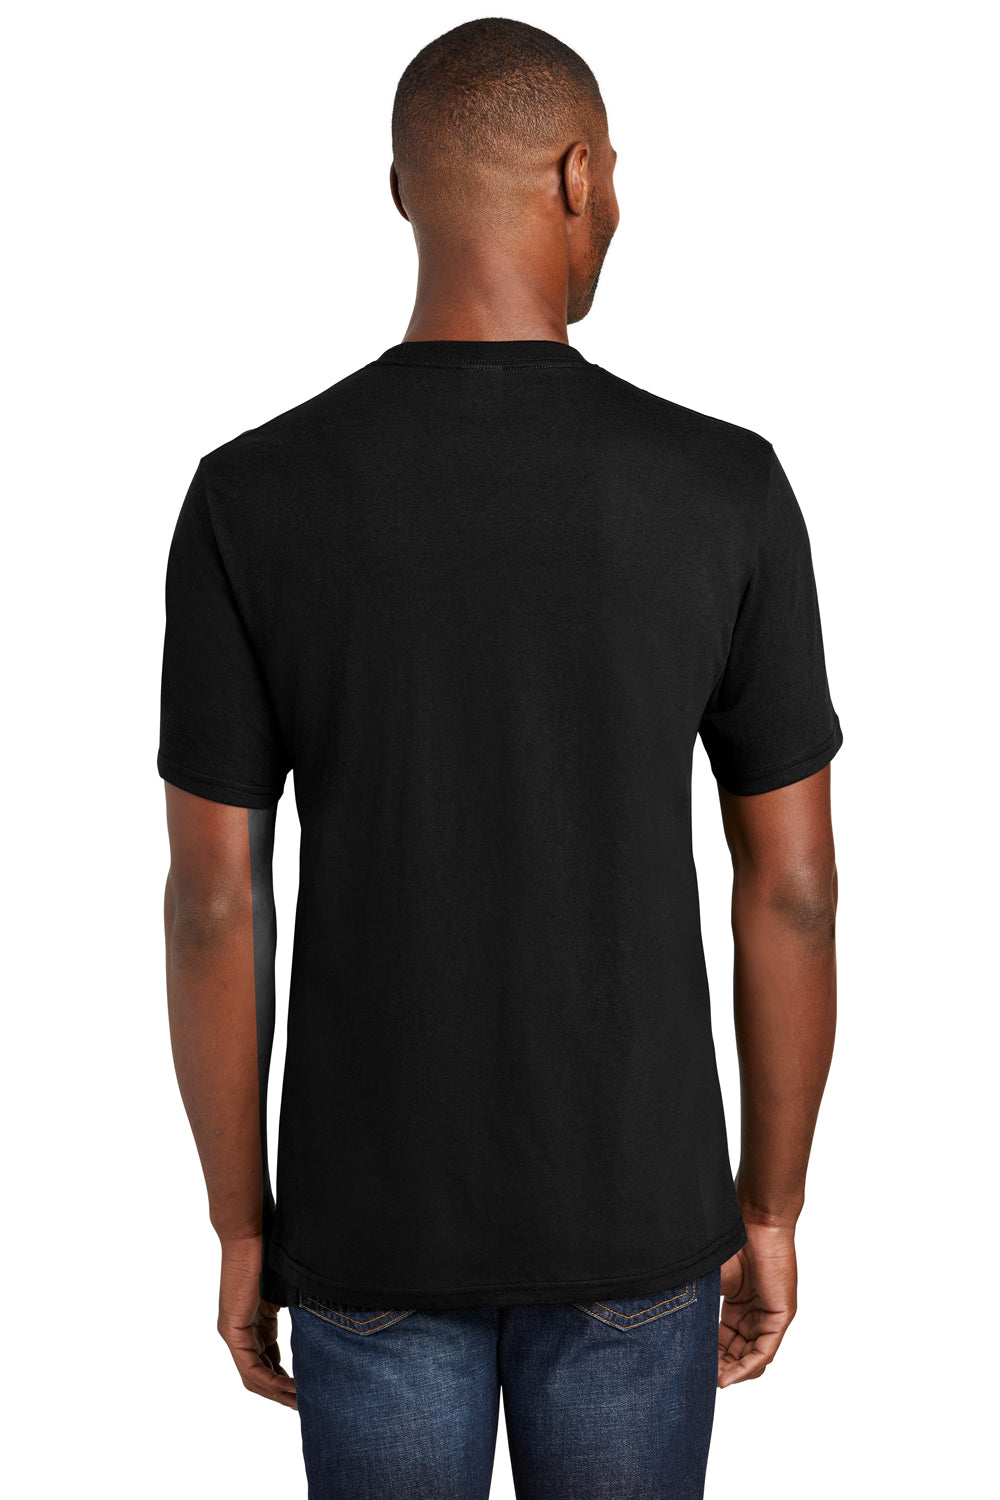 Port & Company PC455 Mens Fan Favorite Short Sleeve Crewneck T-Shirt Black Back